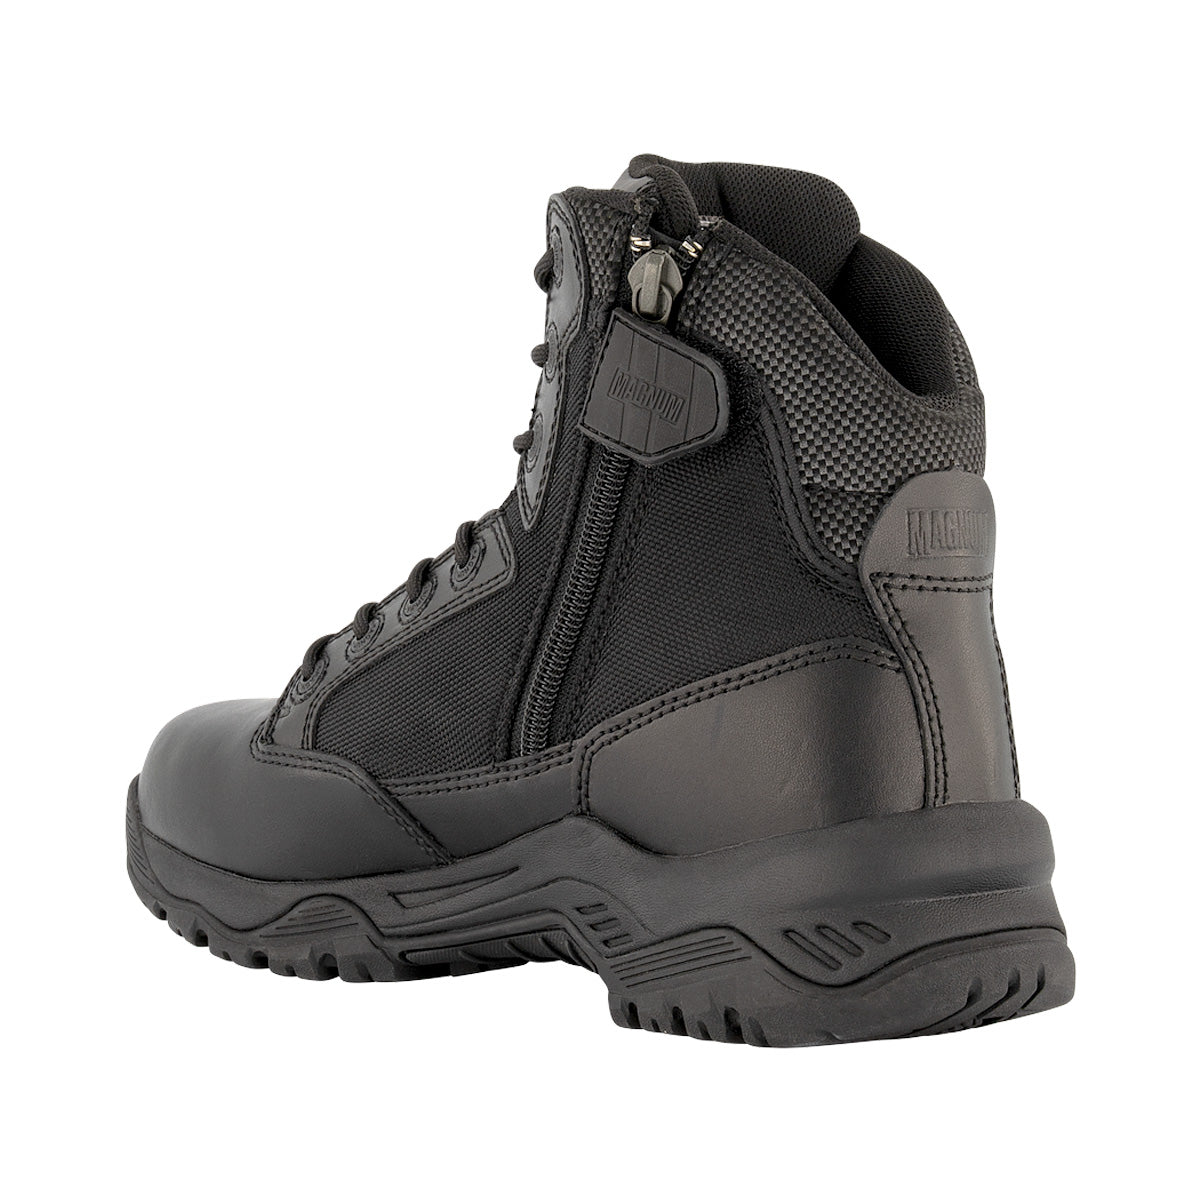 Magnum Strike Force 6.0 Side-Zip Women's Boot Black Footwear Magnum Footwear Tactical Gear Supplier Tactical Distributors Australia